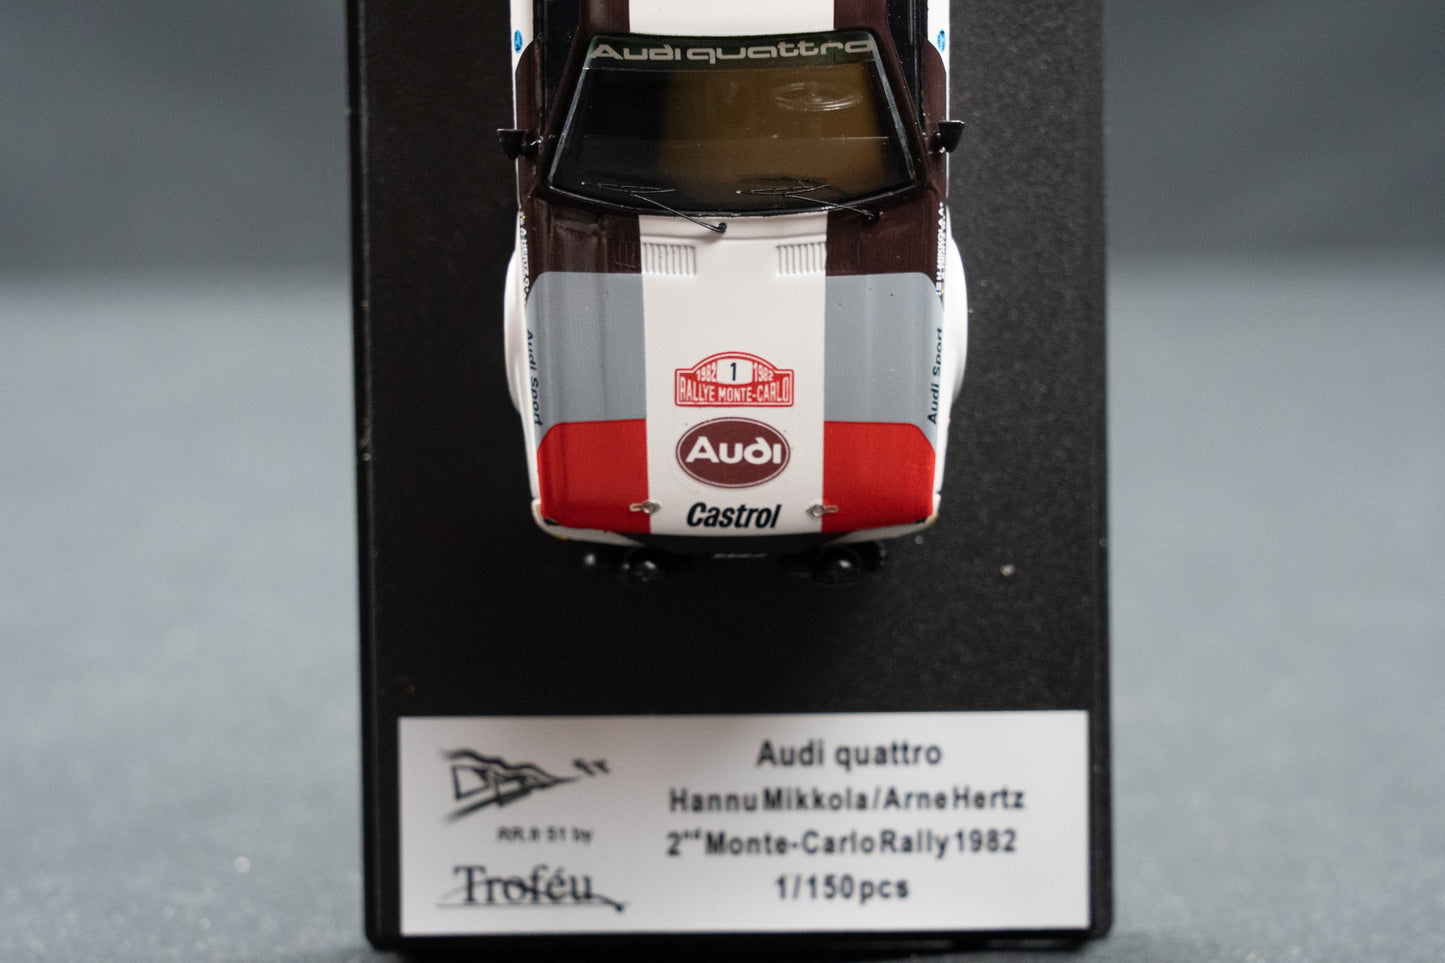 Audi Quattro lim. edition 1/150 Stk. #1 H. Mikkola / A. Hertz 2nd Rallye Monte Carlo 1982